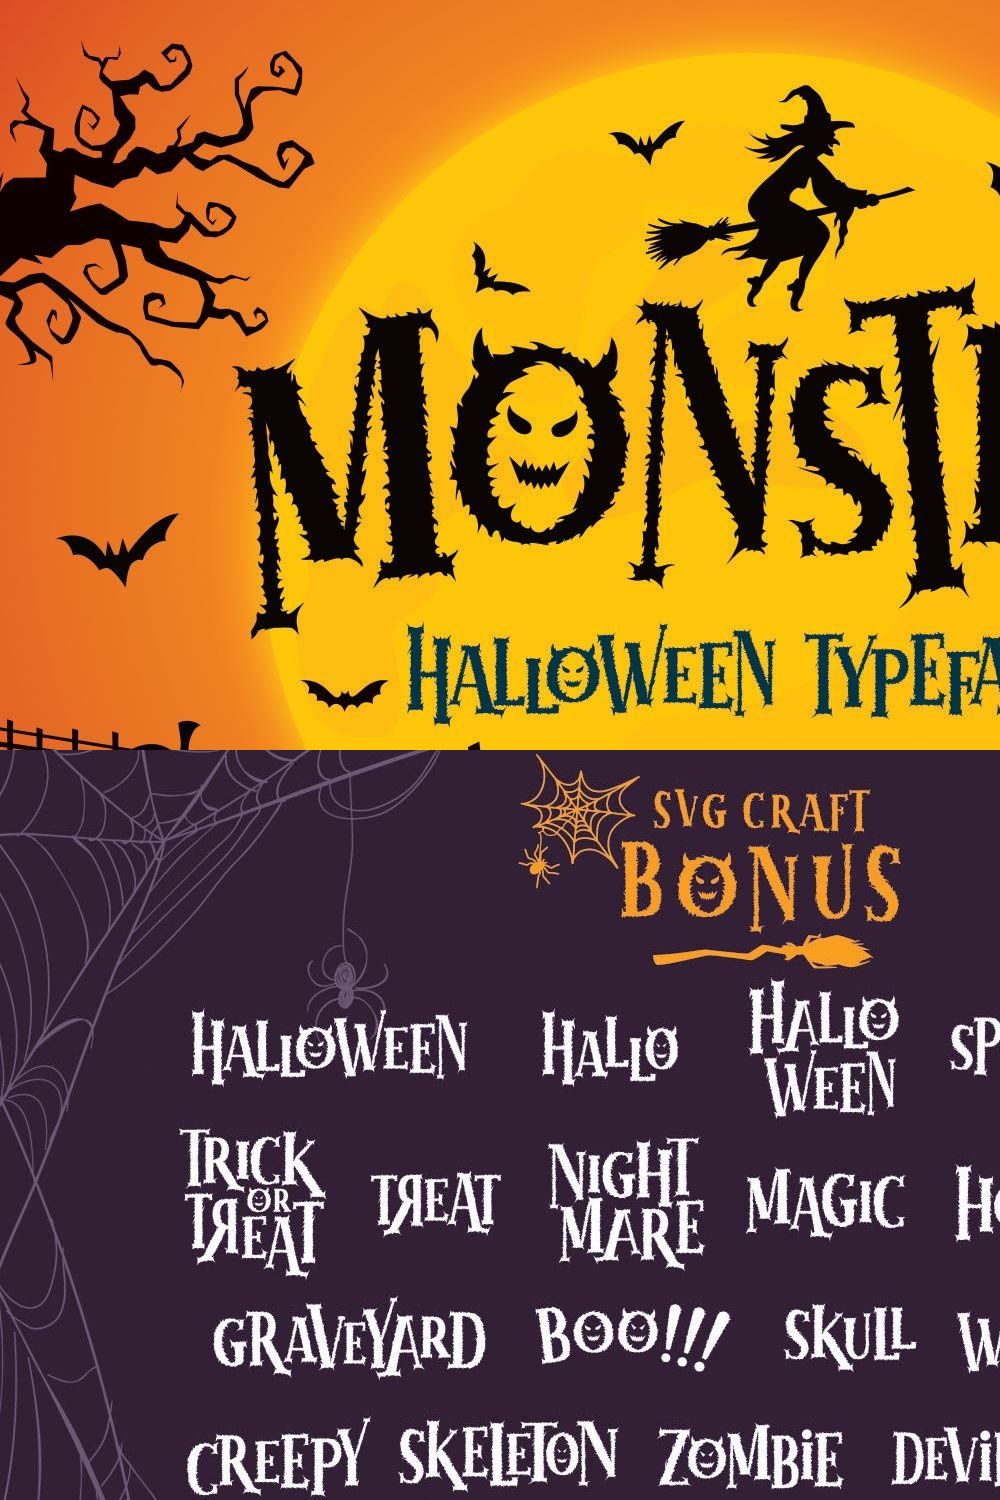 Monster Halloween pinterest preview image.